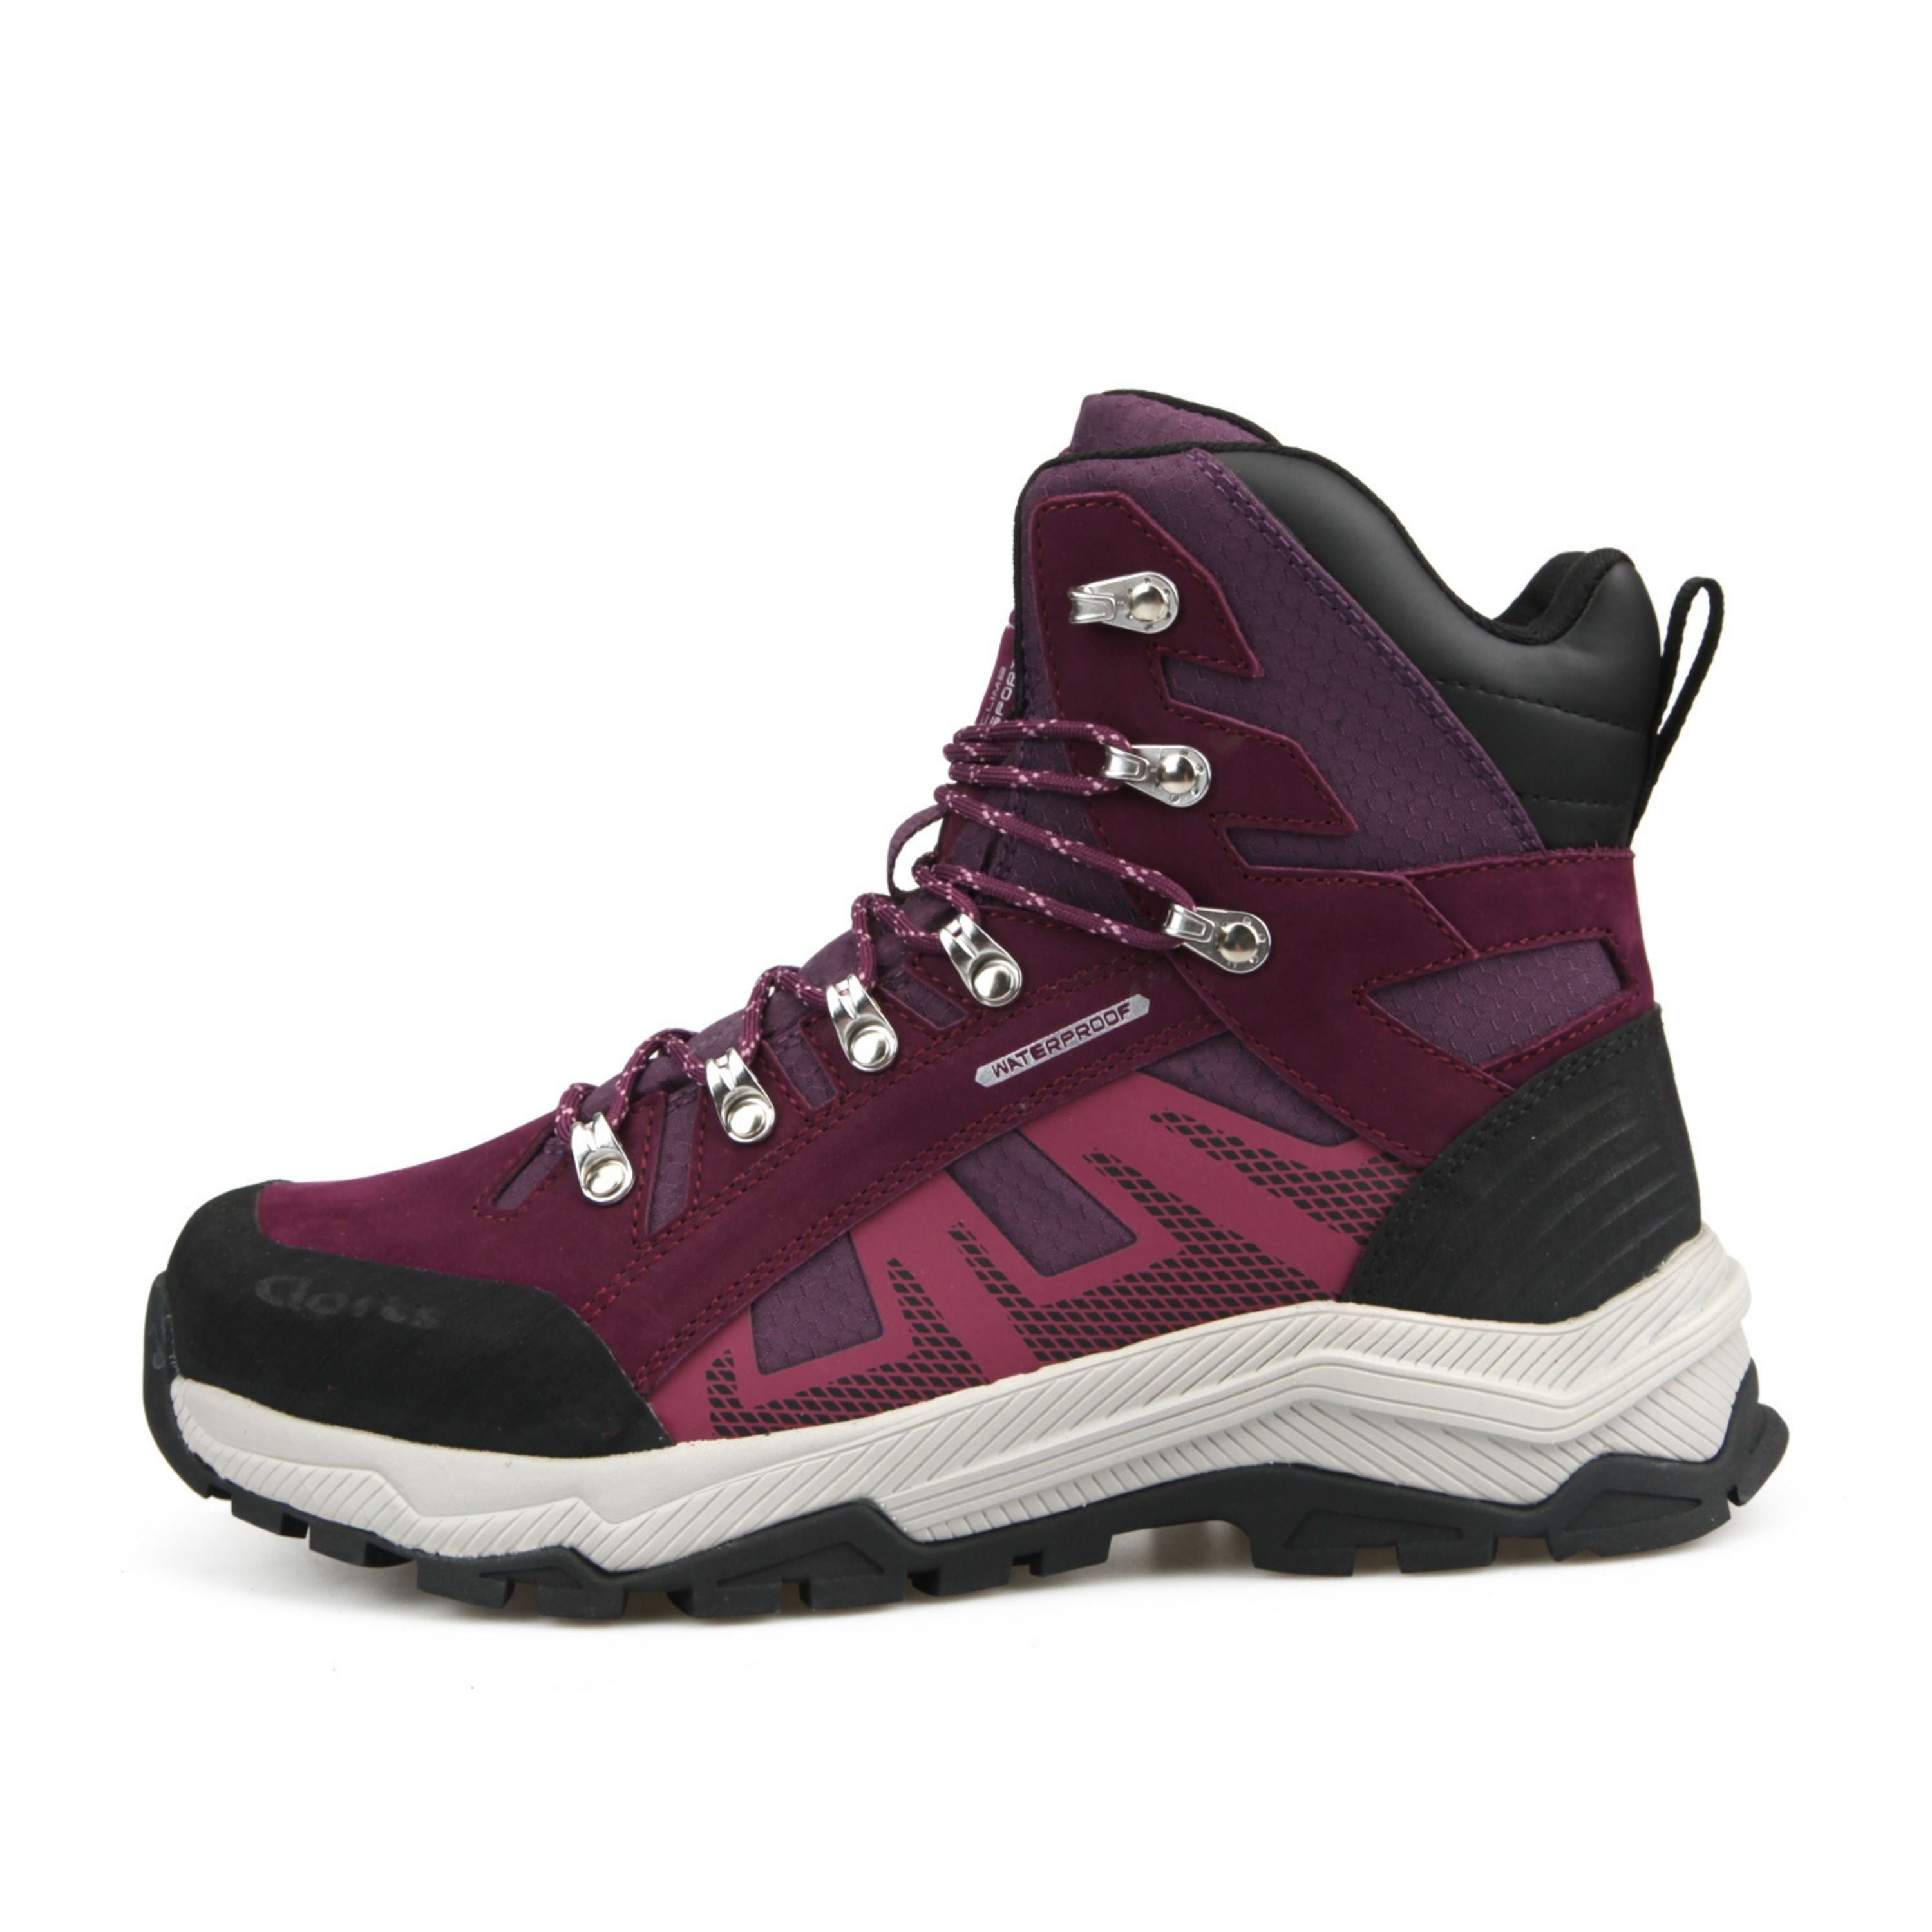 Hiking boots - Women's